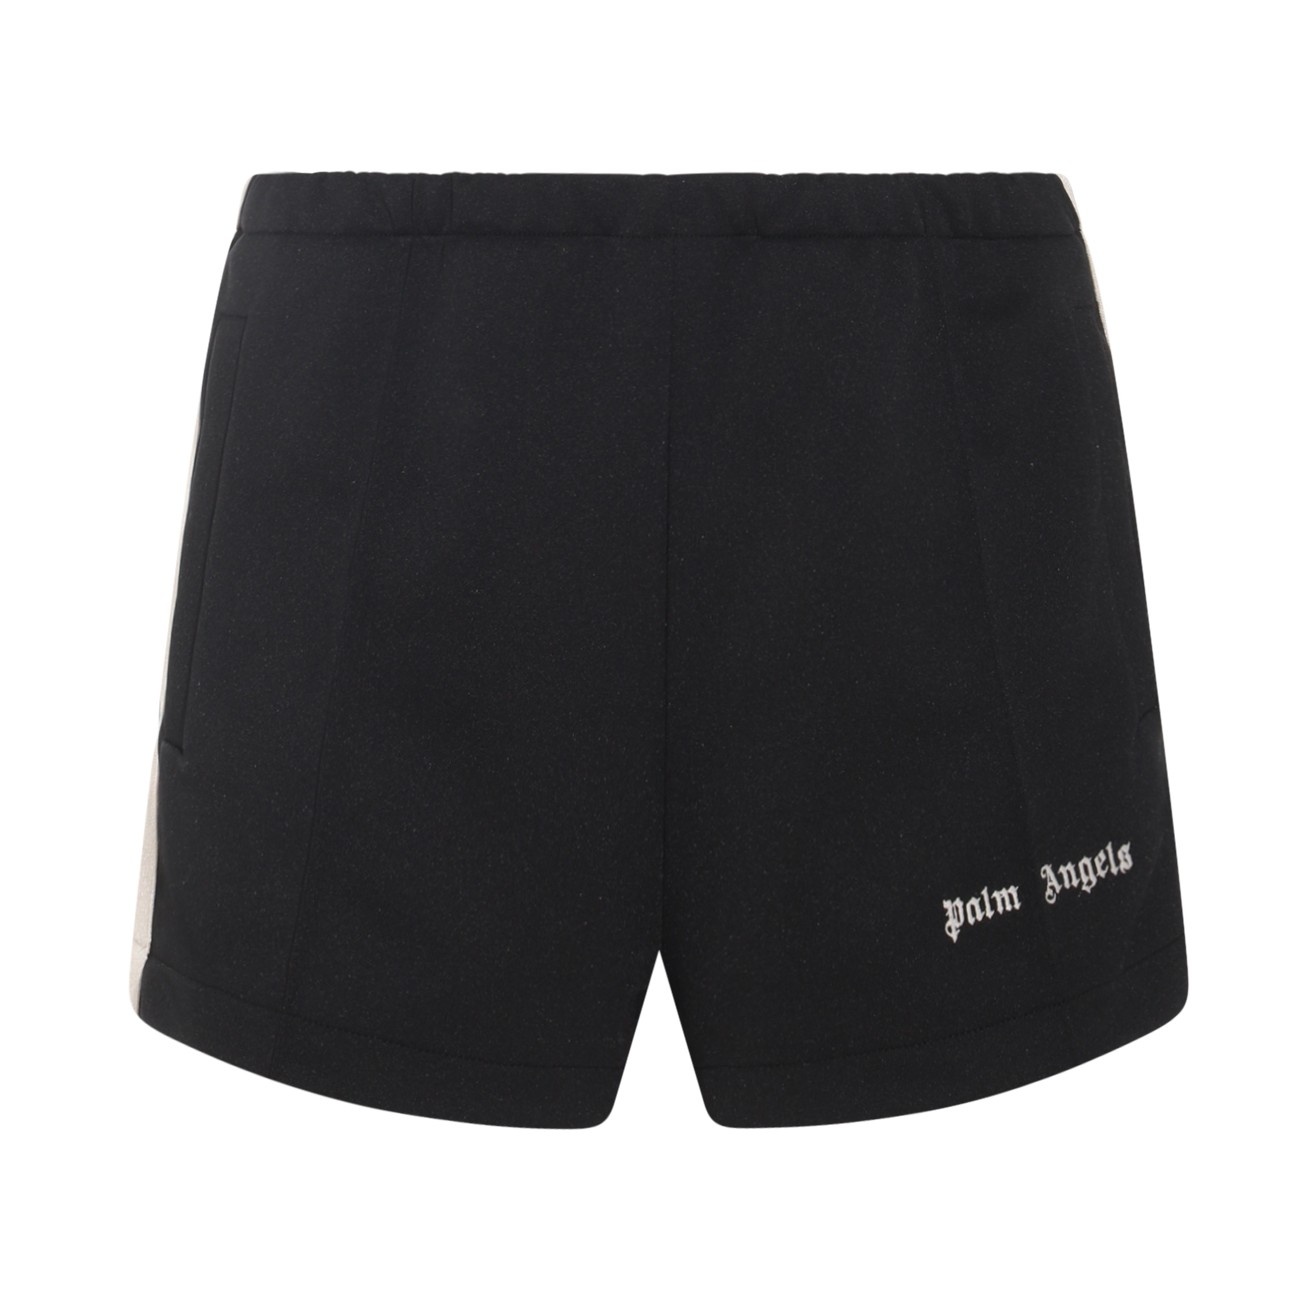 black shorts - 1